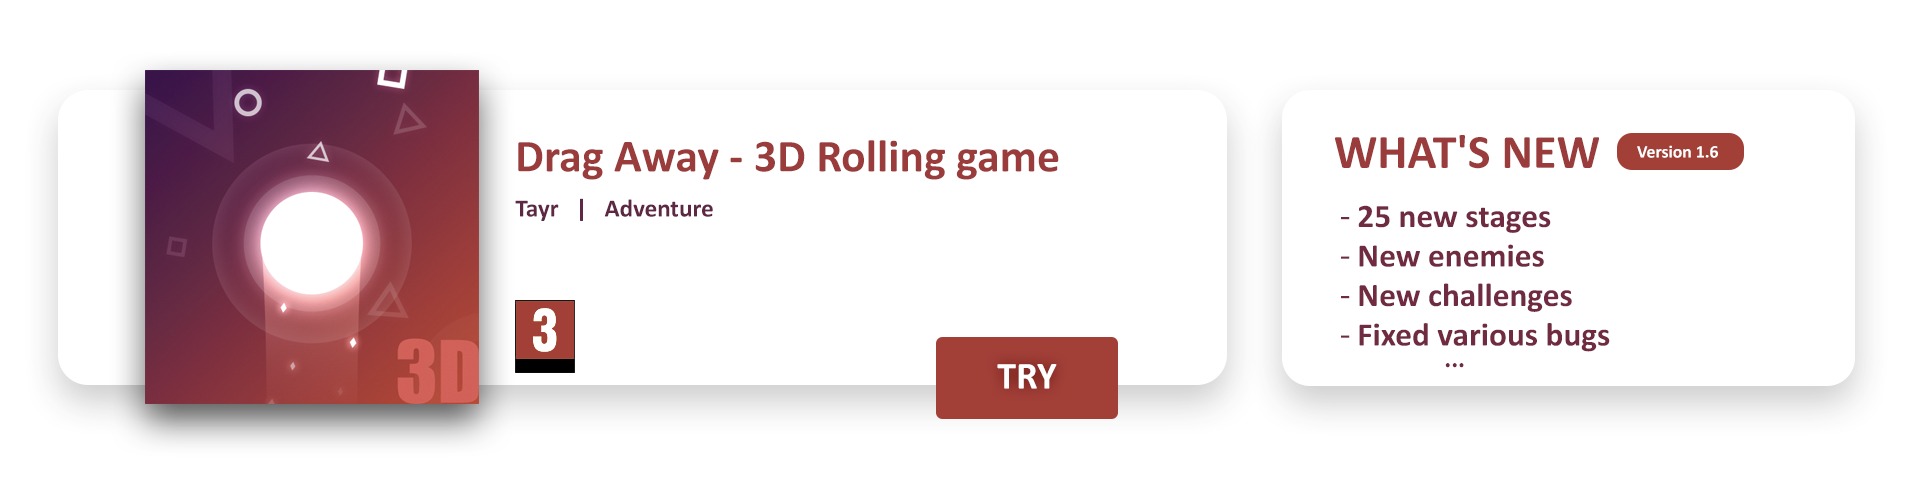 Drag Away - 3D Rolling game